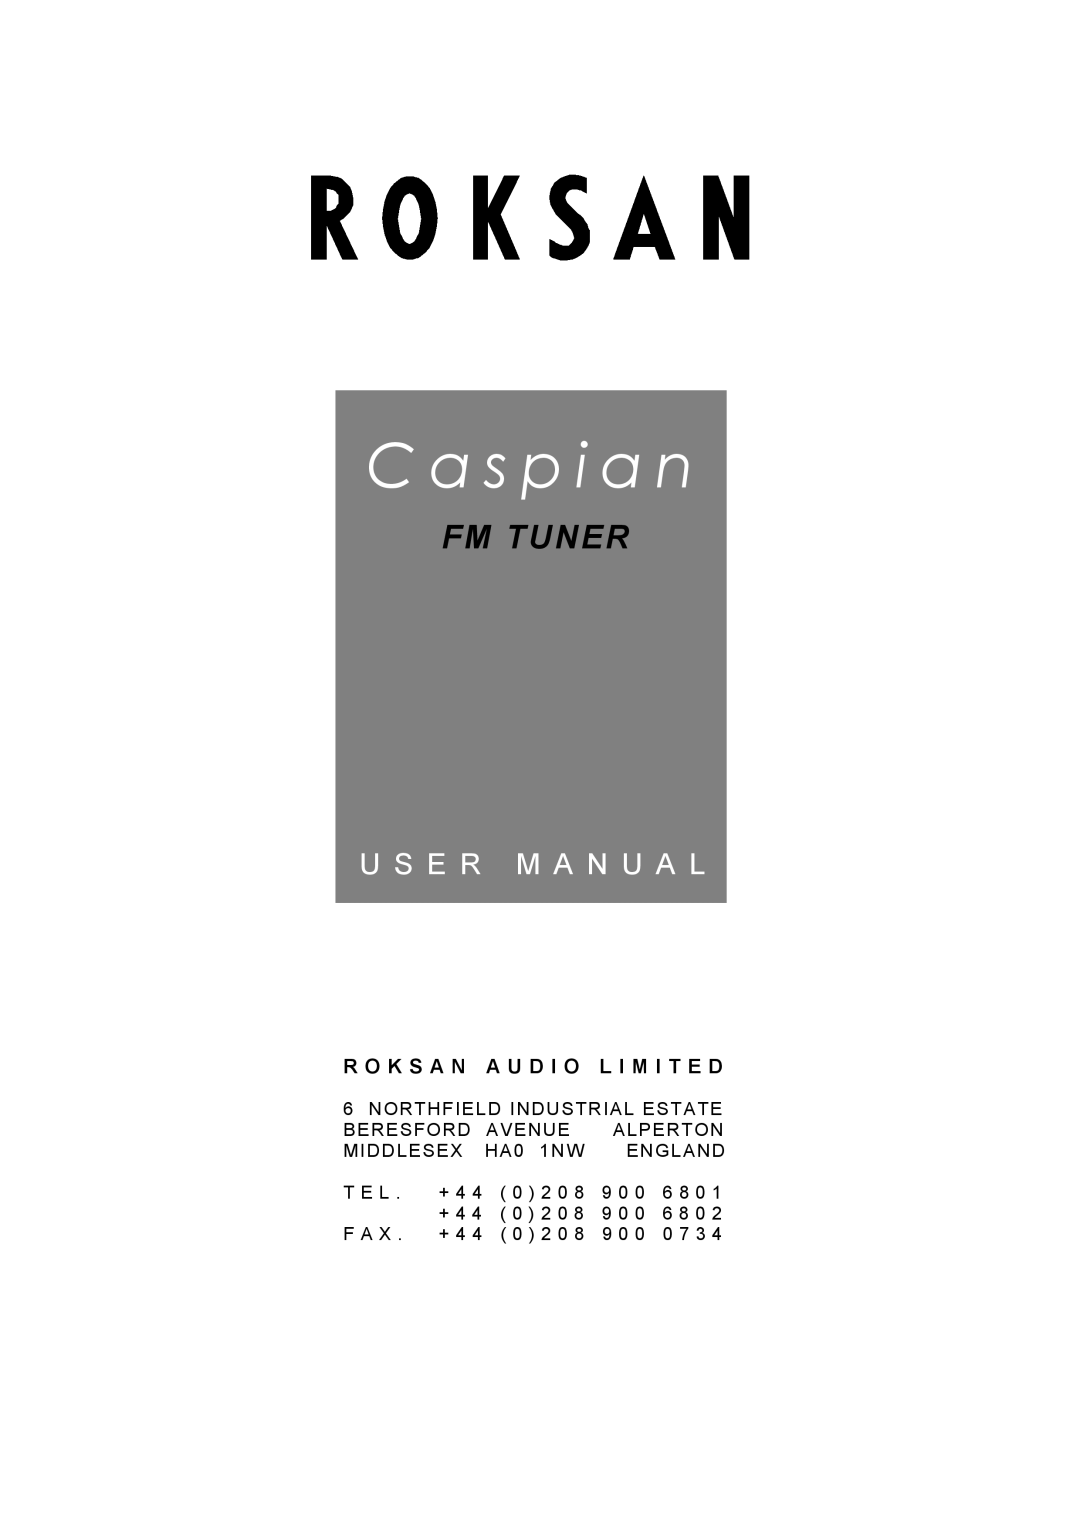 Roksan Audio Caspian FM TUNER user manual R O K S A N A U D I O L I M I T E D, C a s p i a n, Fm Tuner 